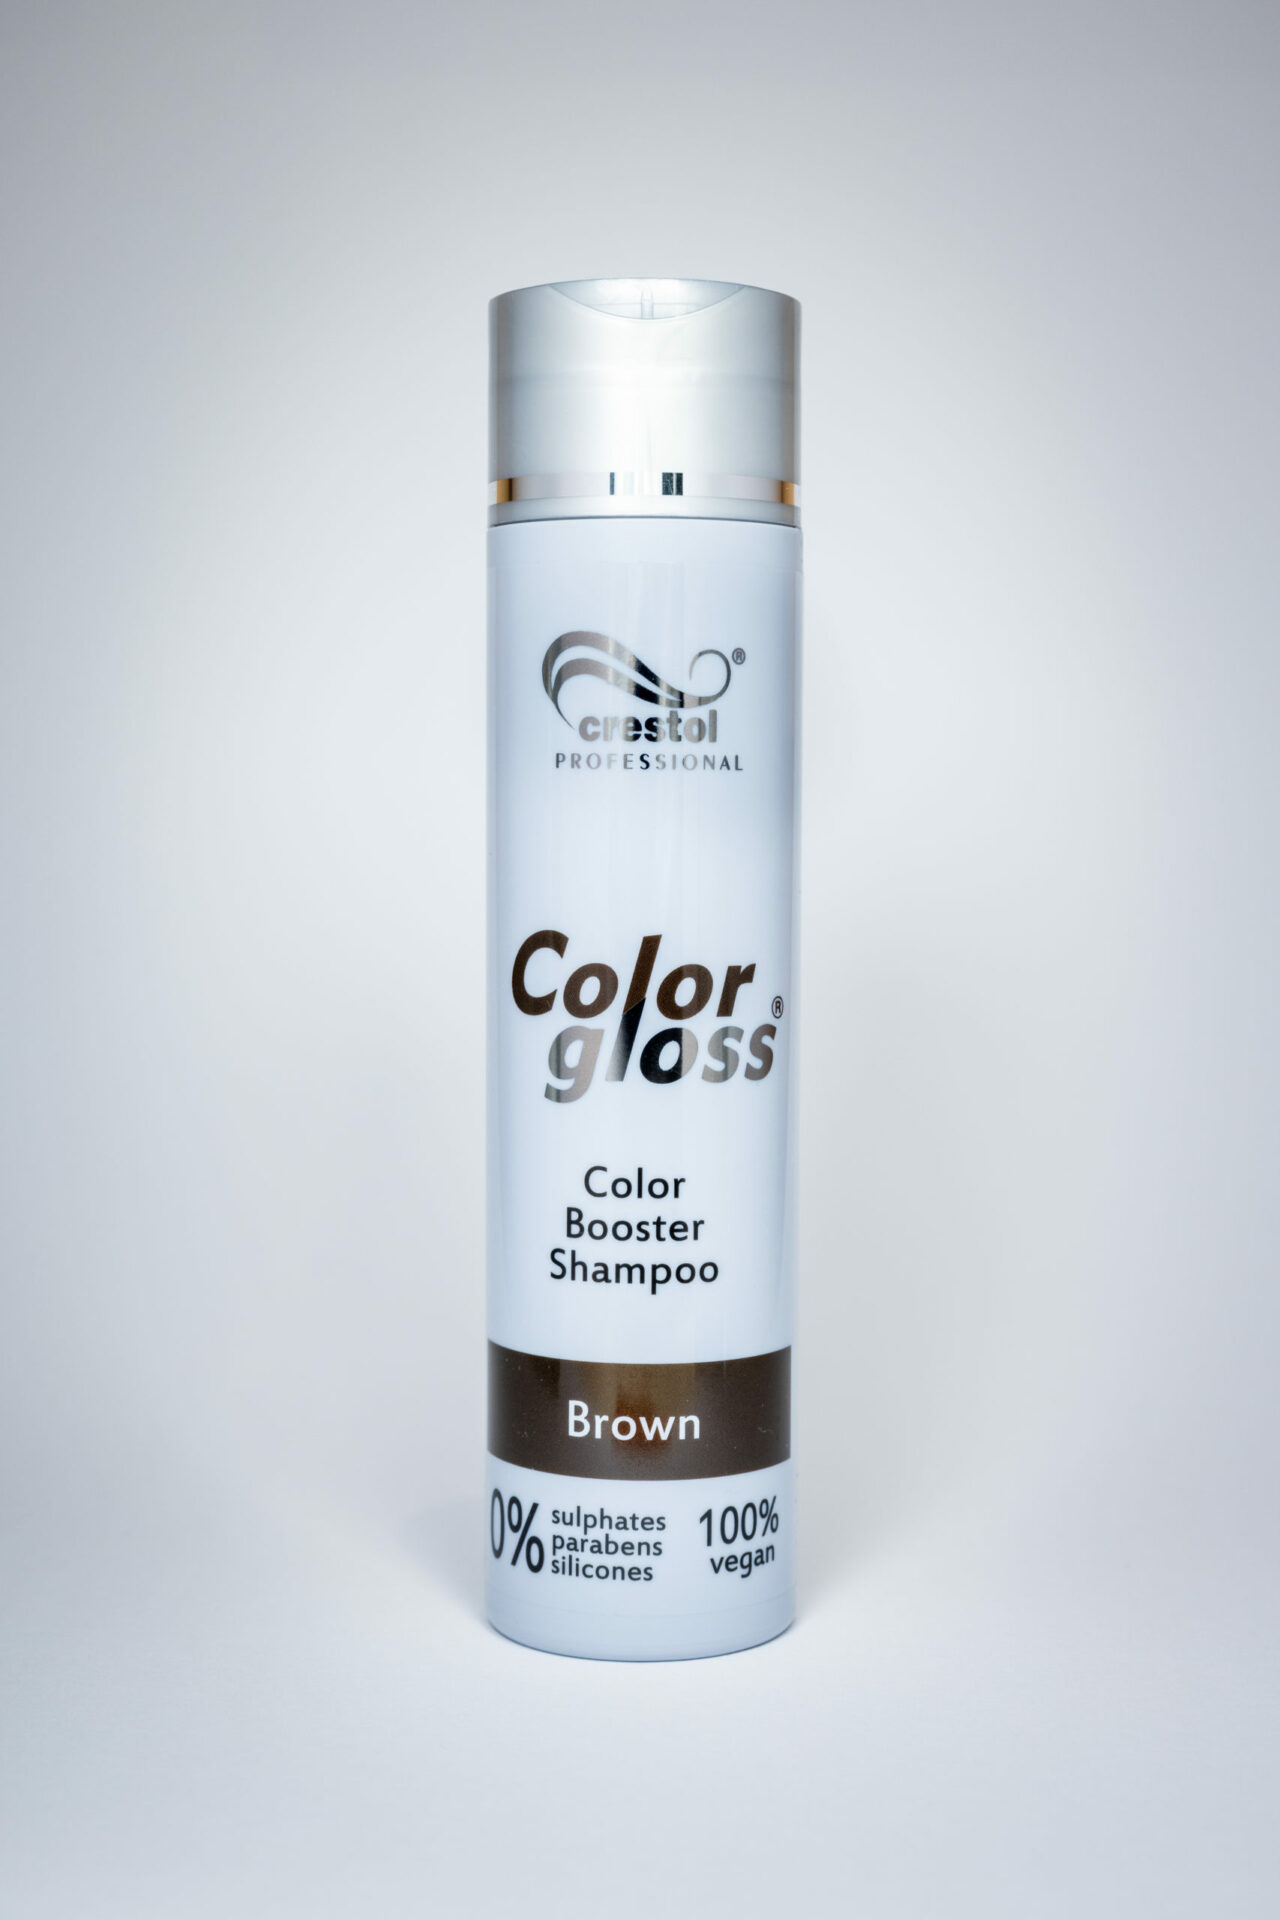 Crestol Color Booster Shampoo Brown